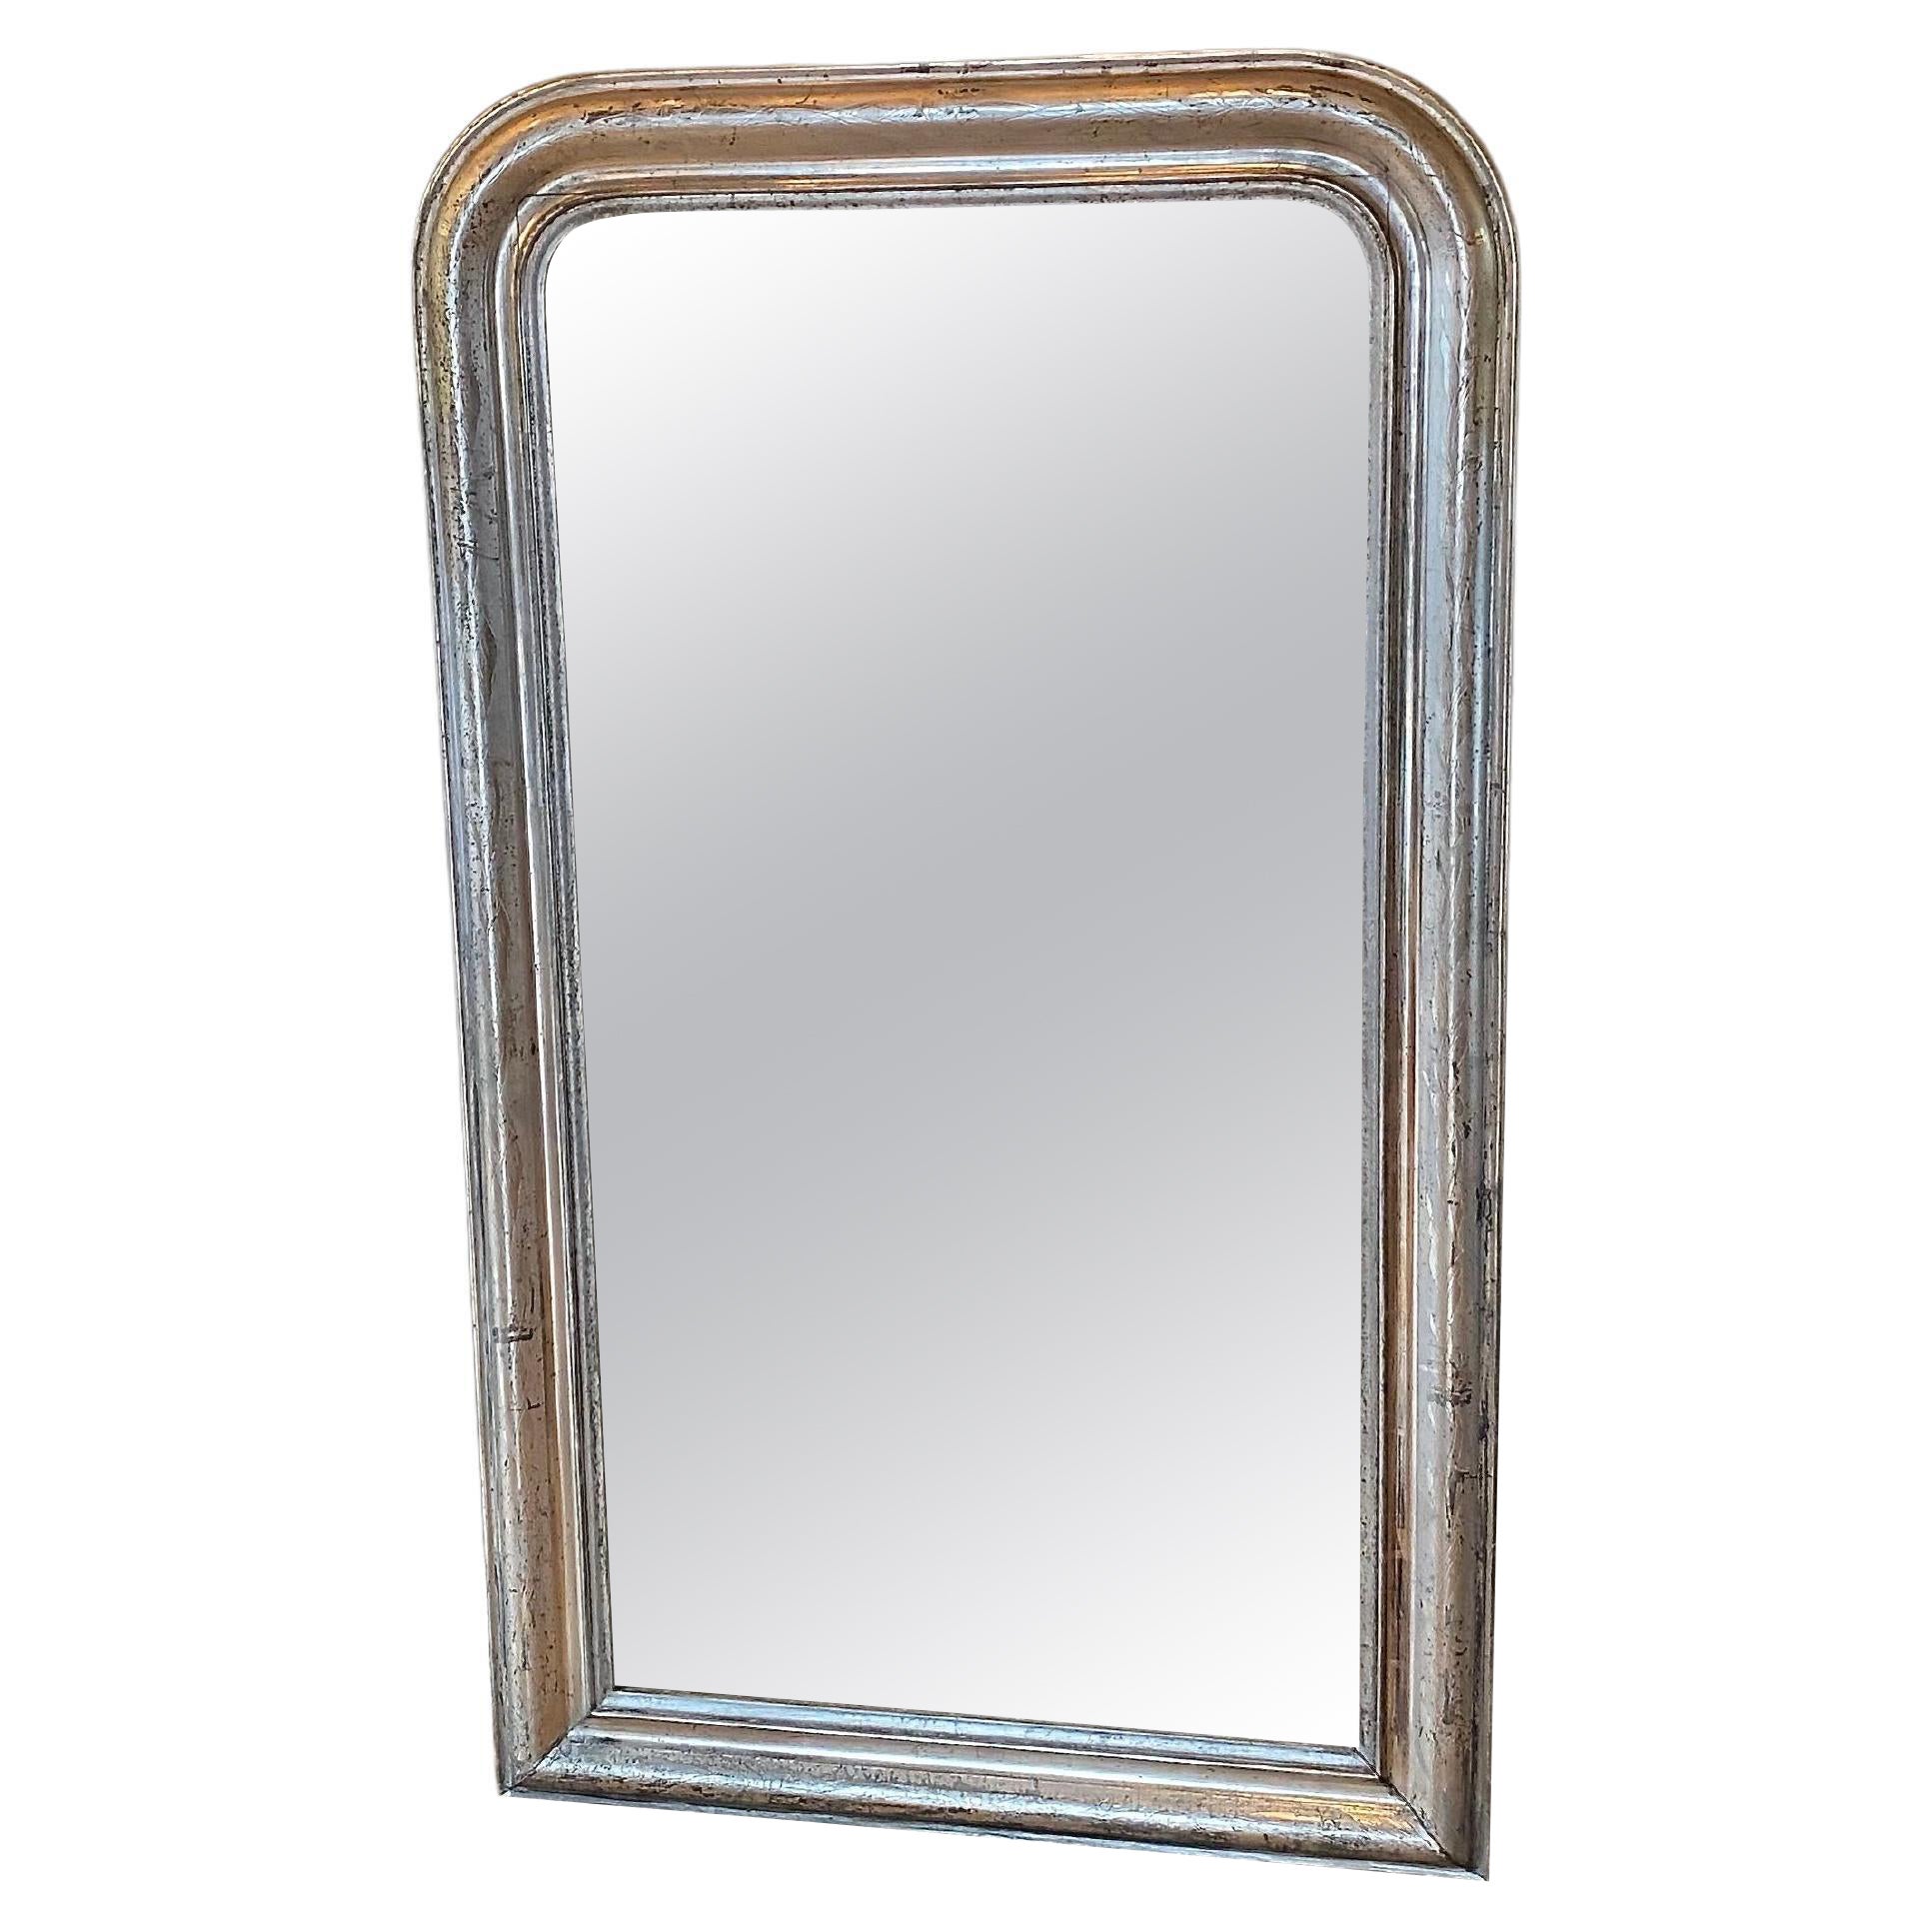 19th c. French silver leaf gilt mirror Louis-Philippe